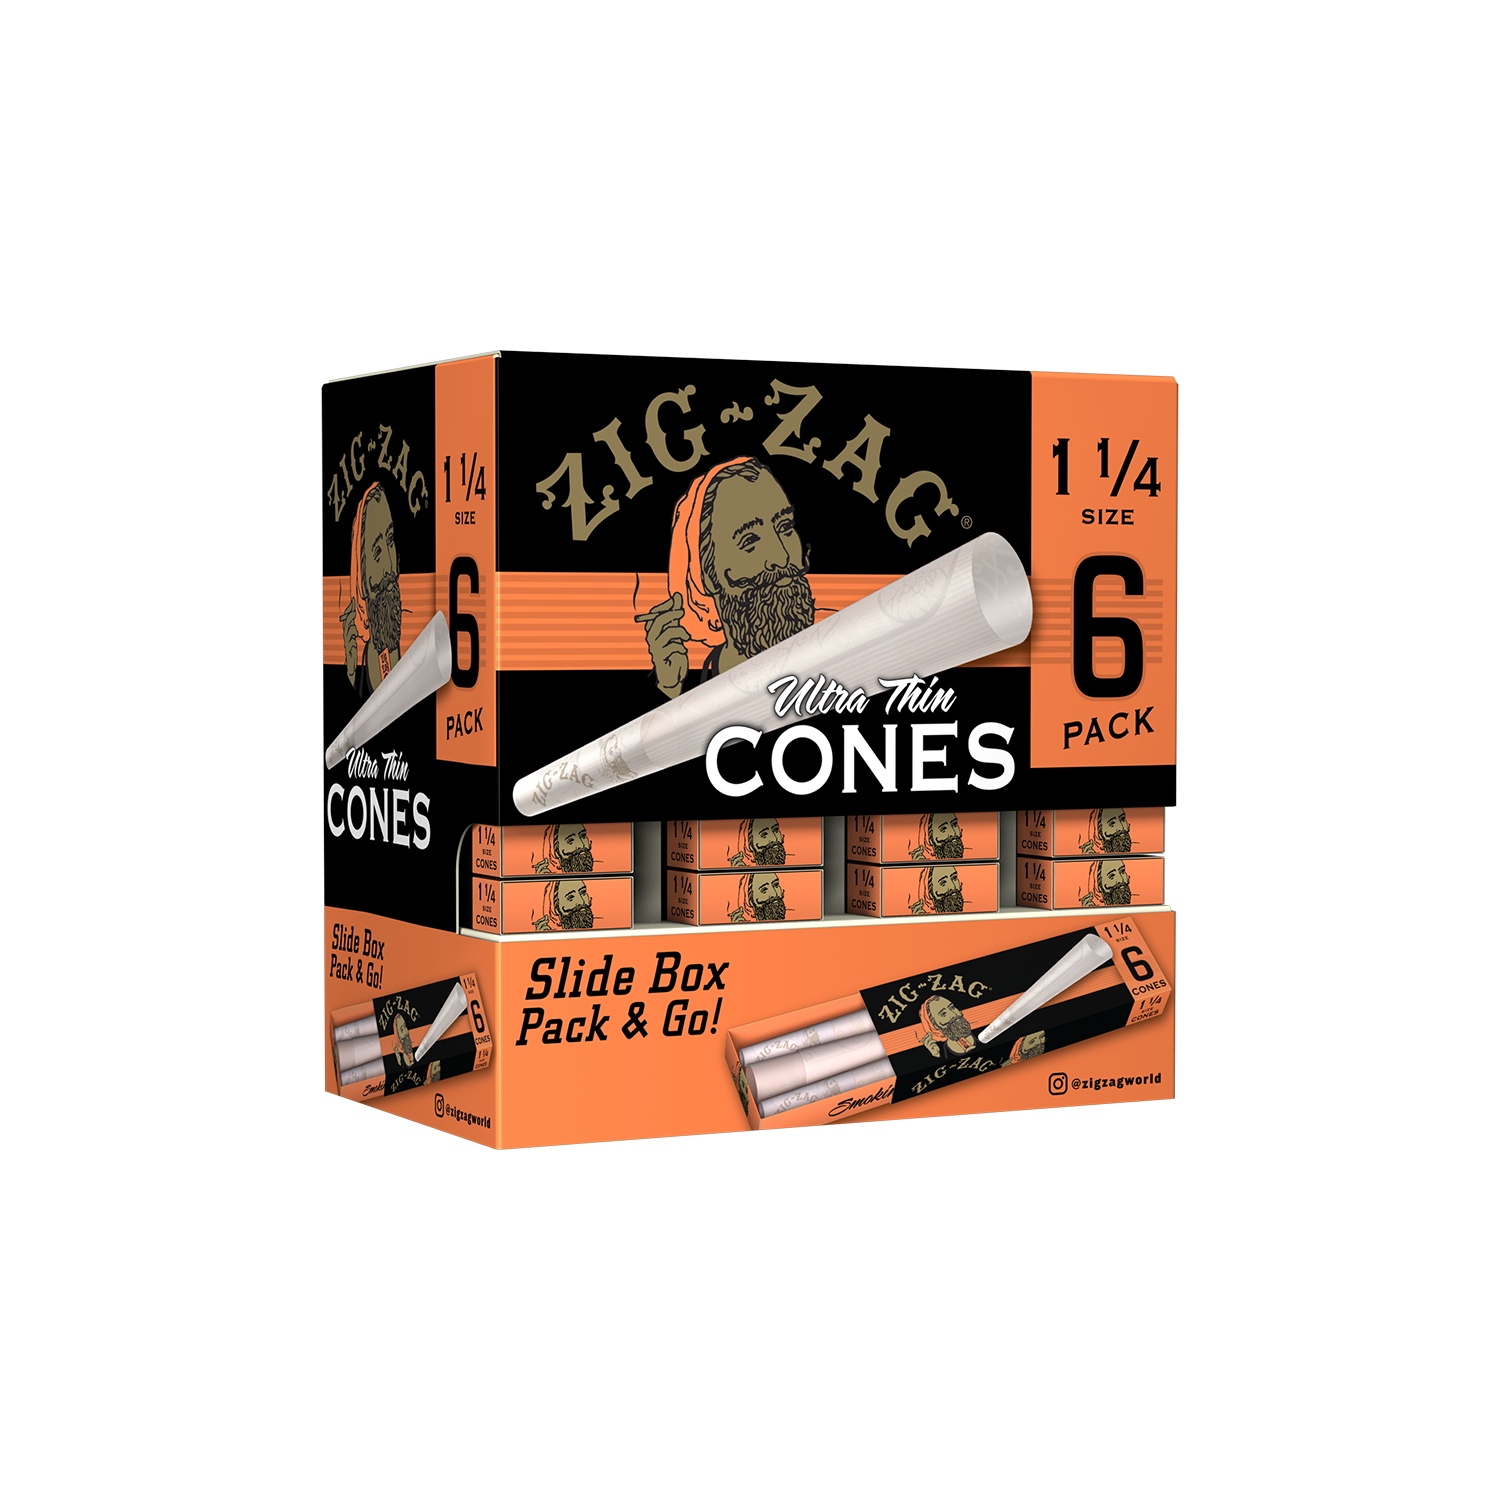 Promo Display (36 Pack) - 1 1/4 Cones